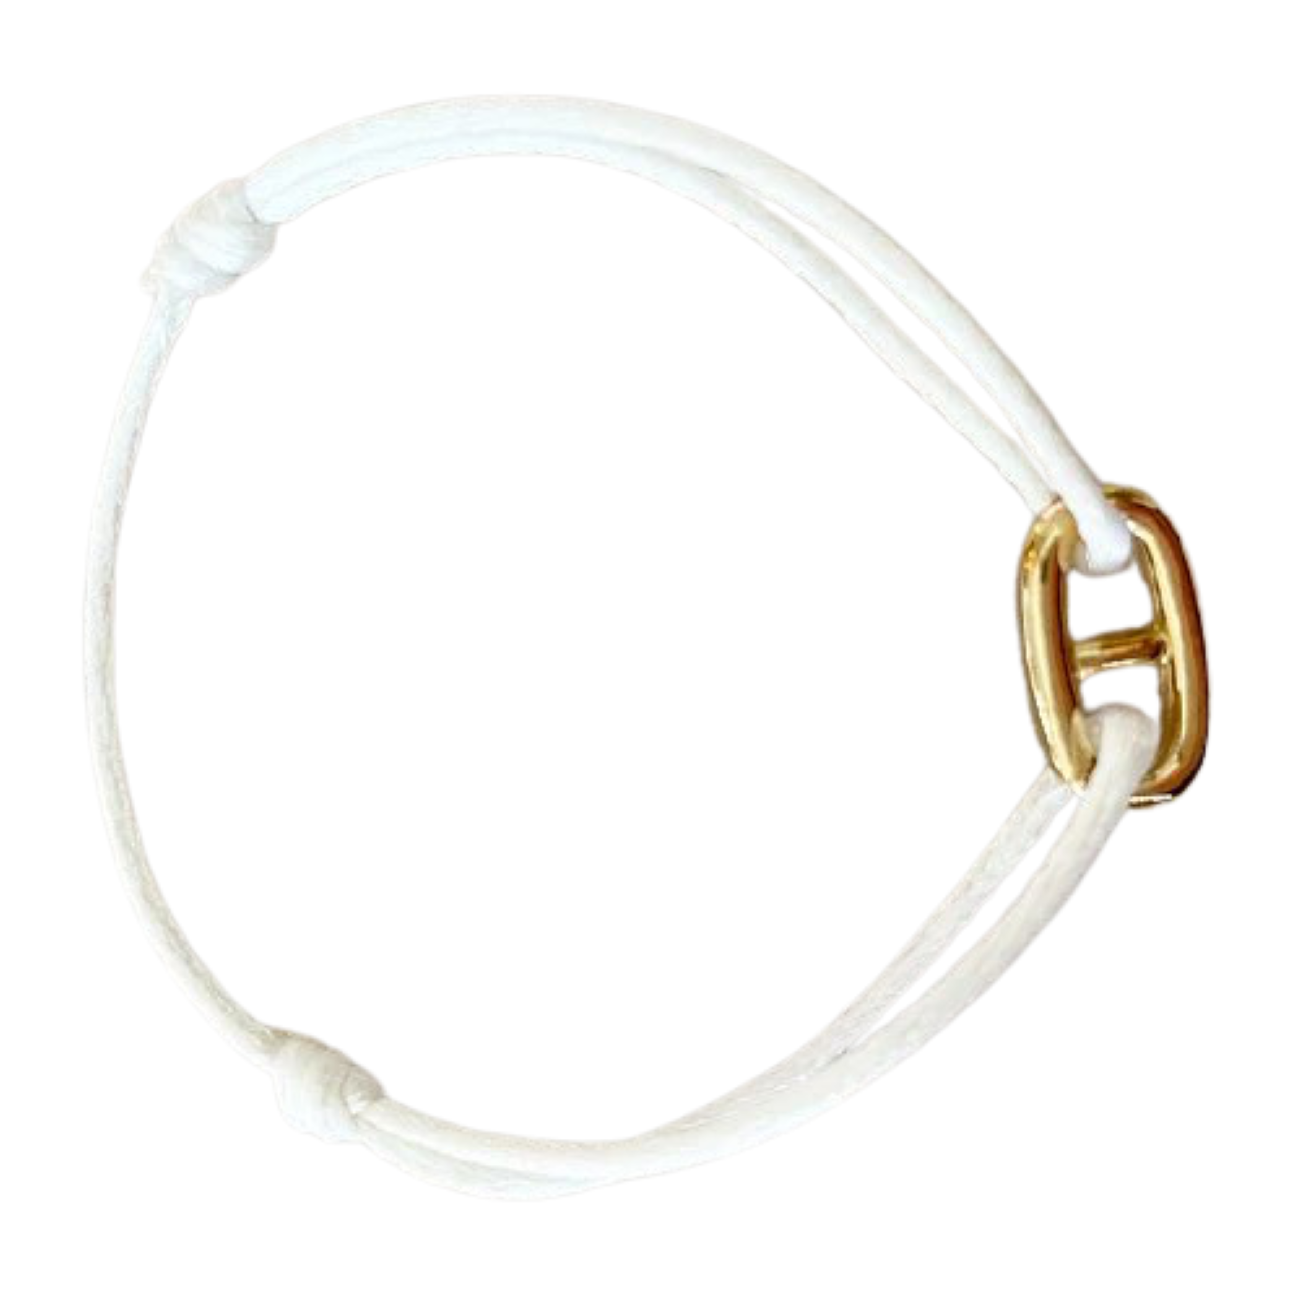 bracelet cordon satin blanc maille or fin femme collection leonie et france